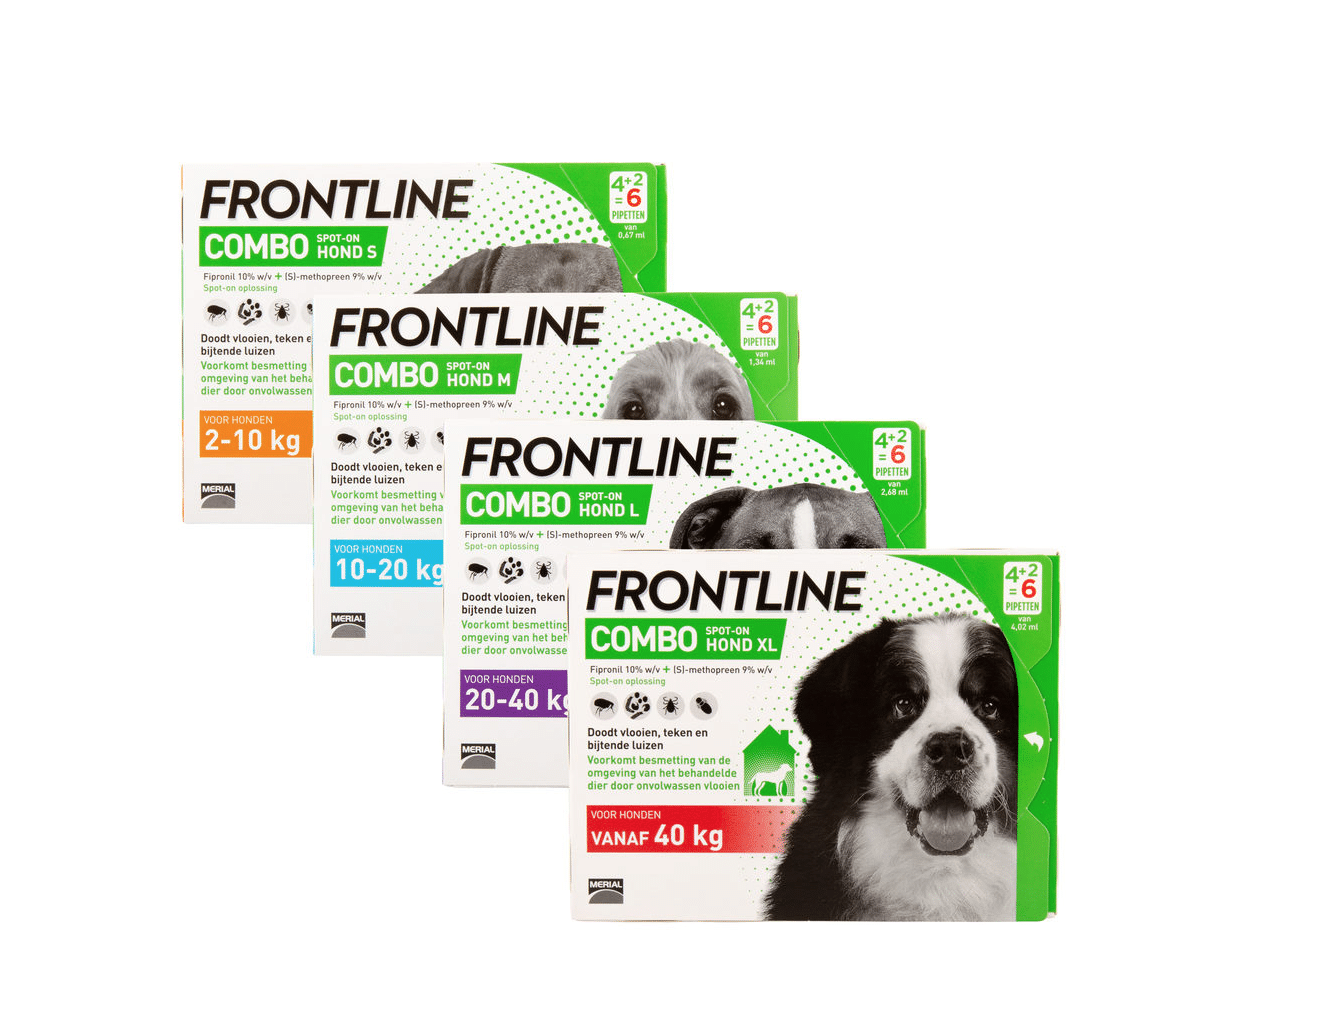 Frontline Combo Hund-1